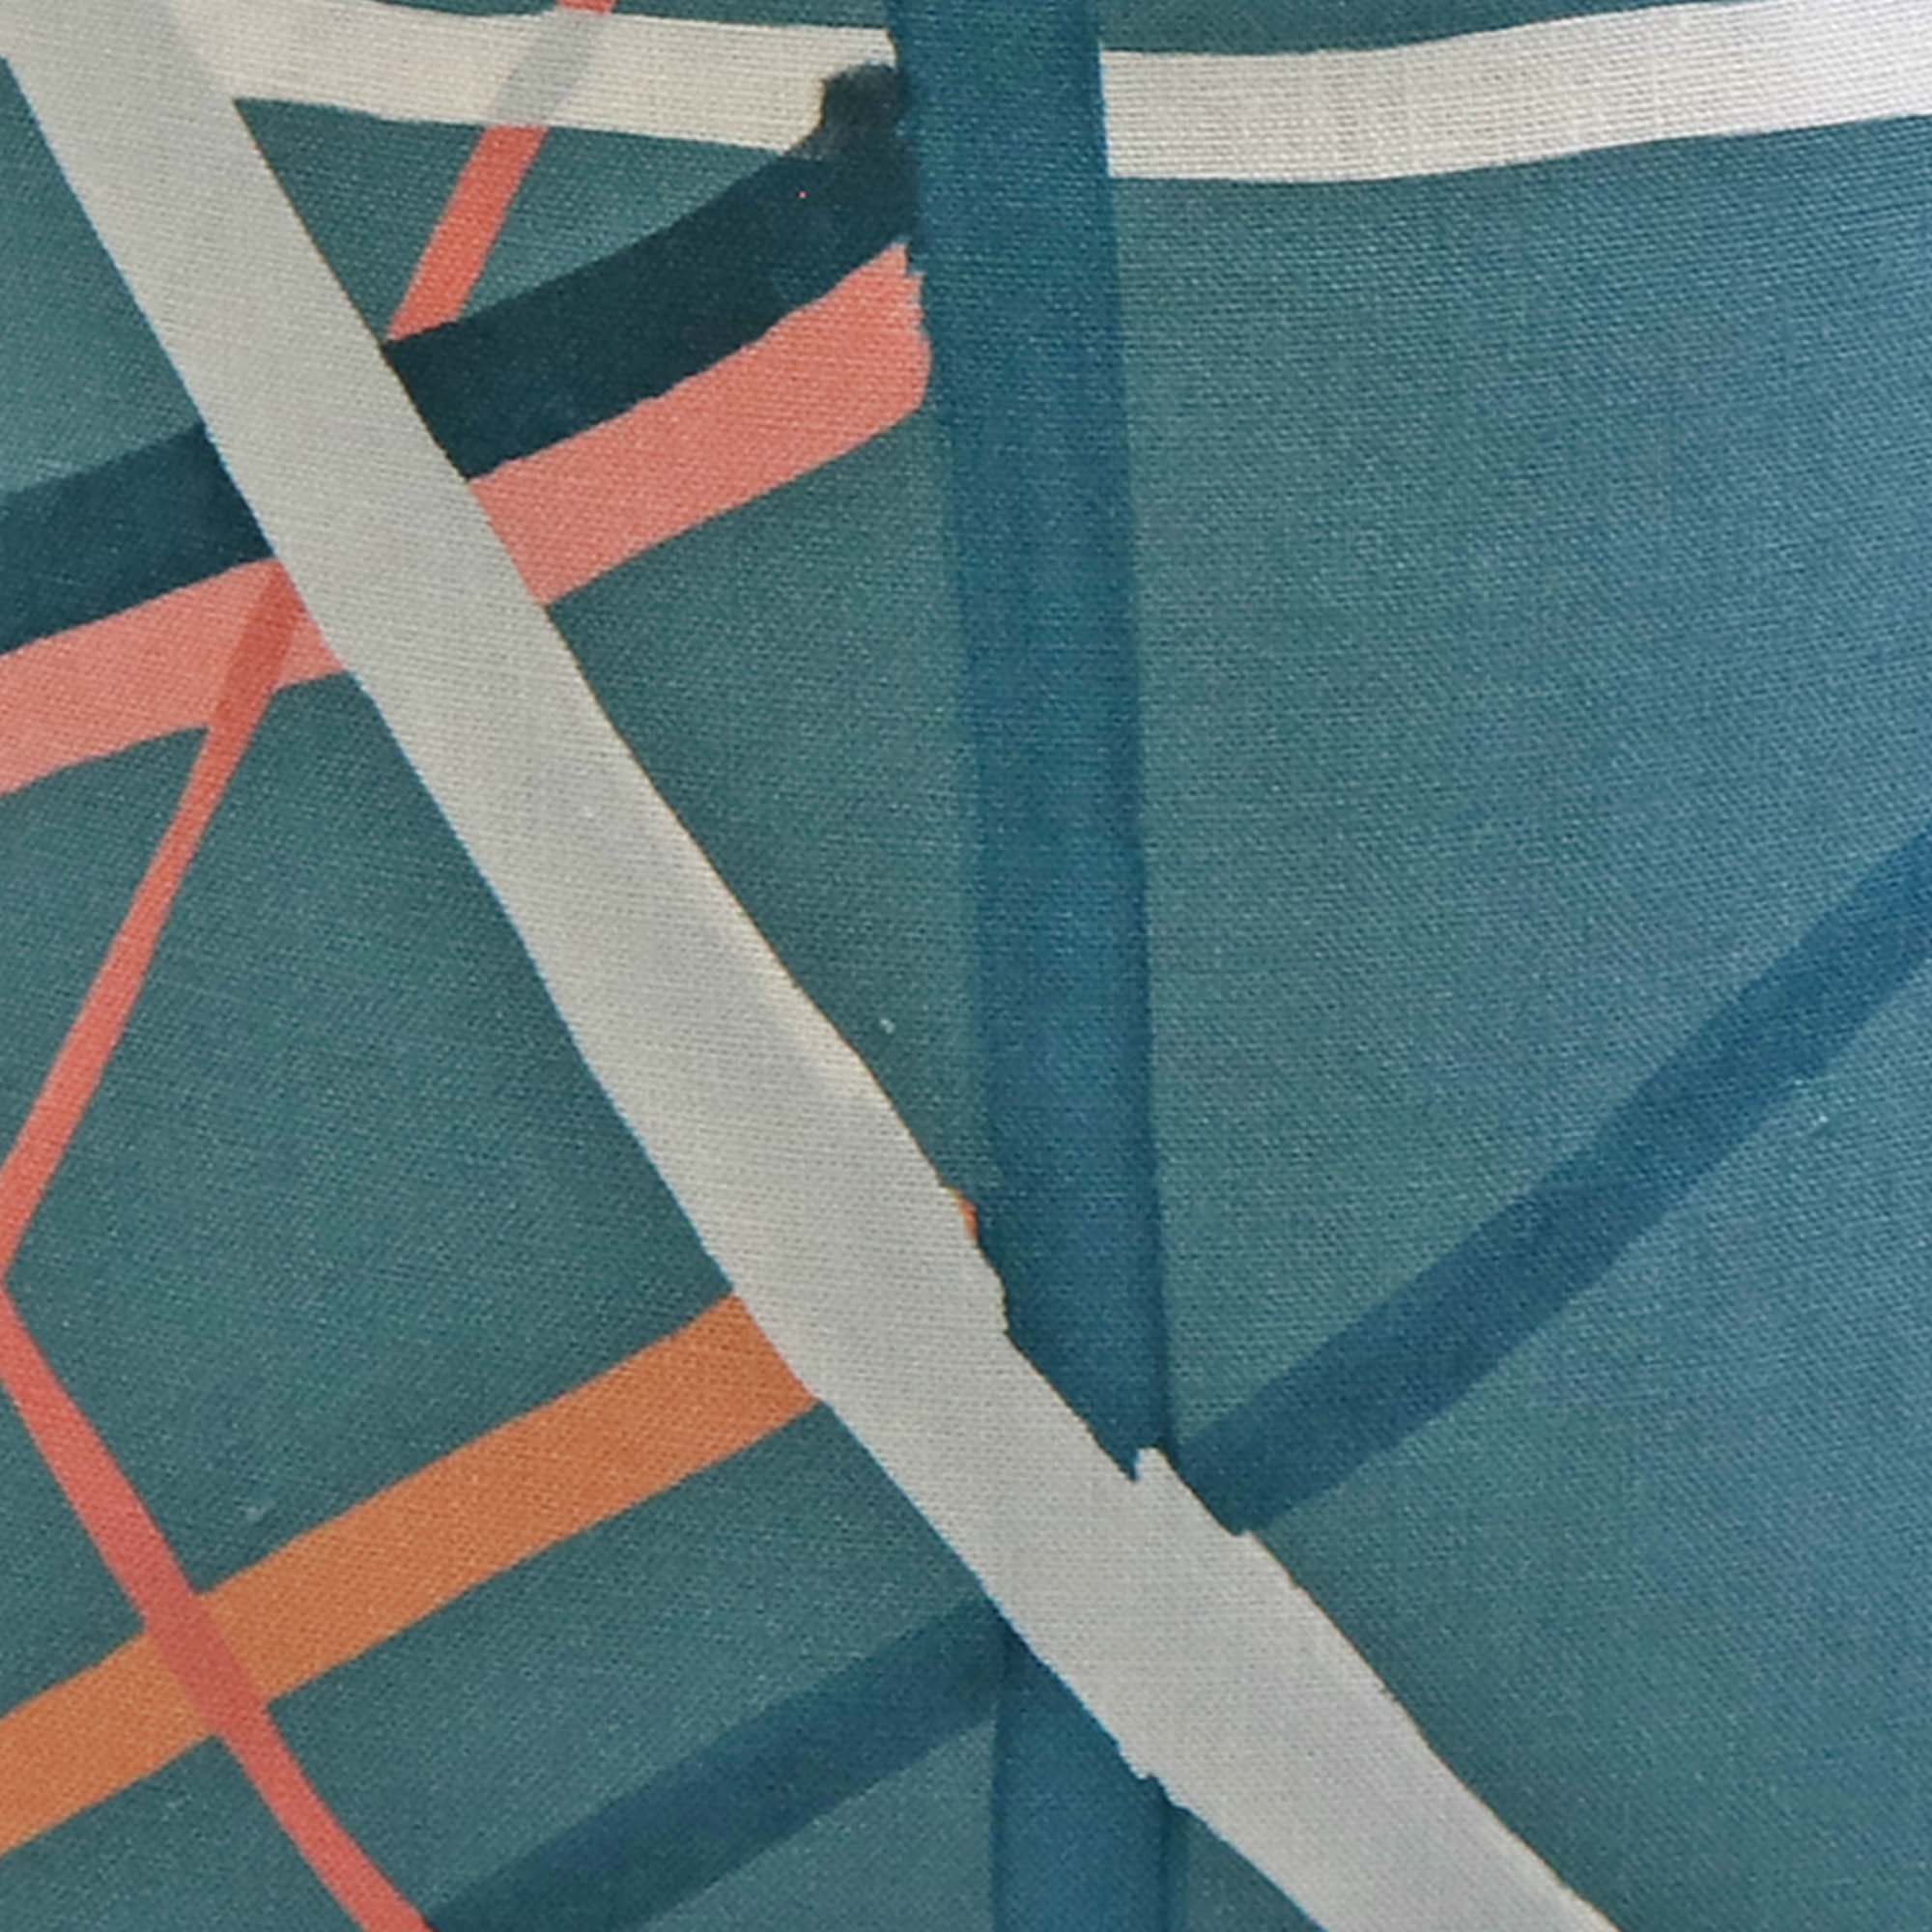 Simpatico Teal / 4x4 inch Fabric Swatch